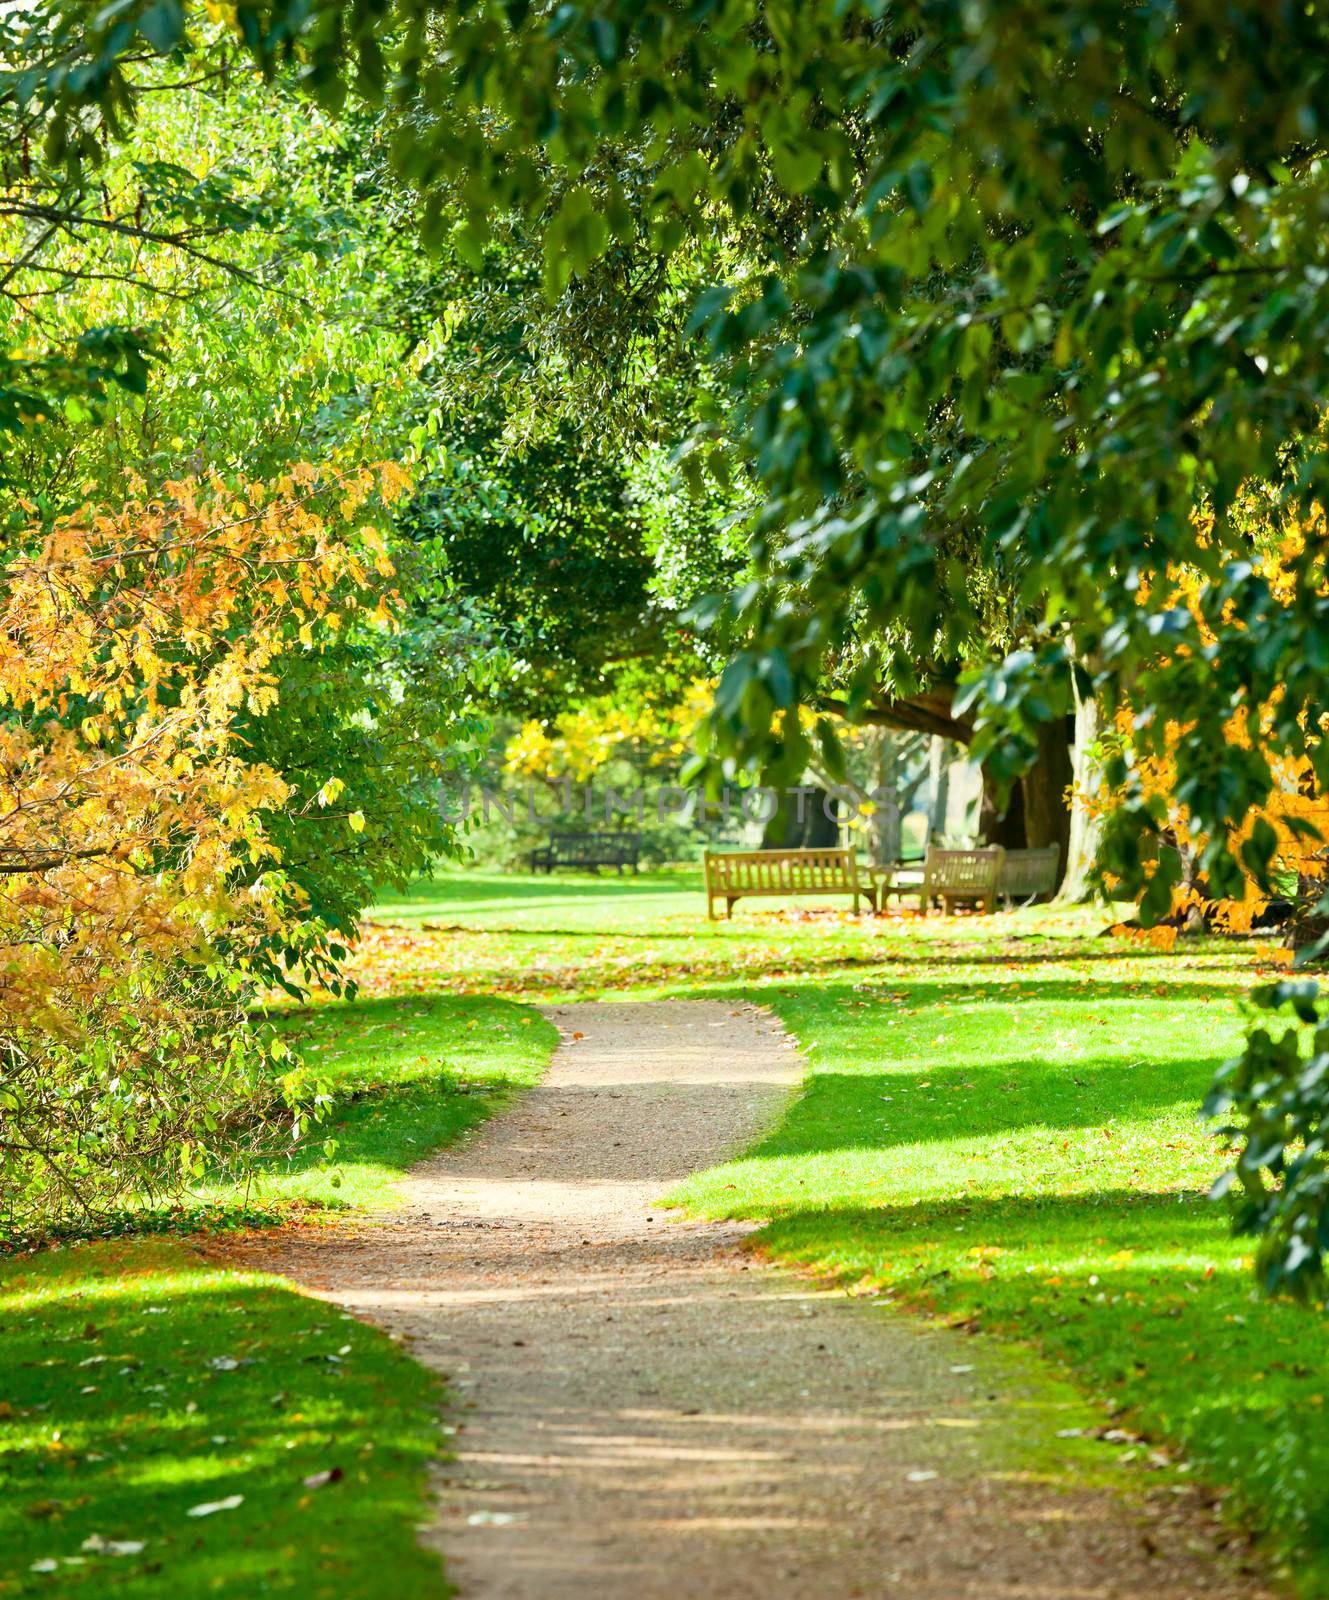 Footpath at the Royal Botanic Gardens in London